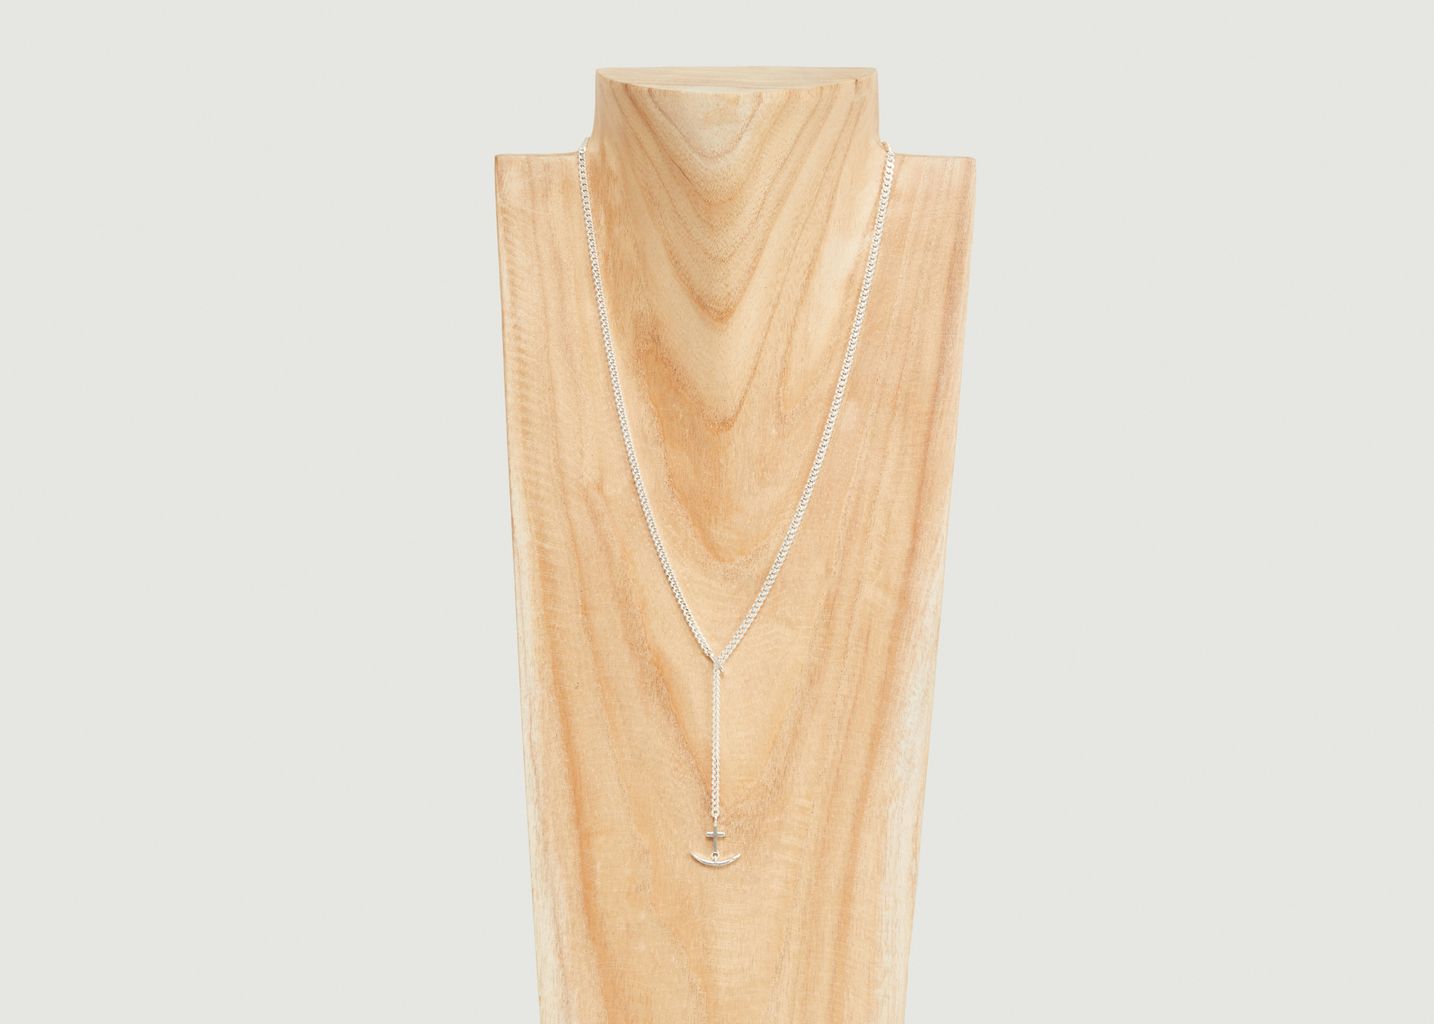 Anchor necklace - Saskia Diez